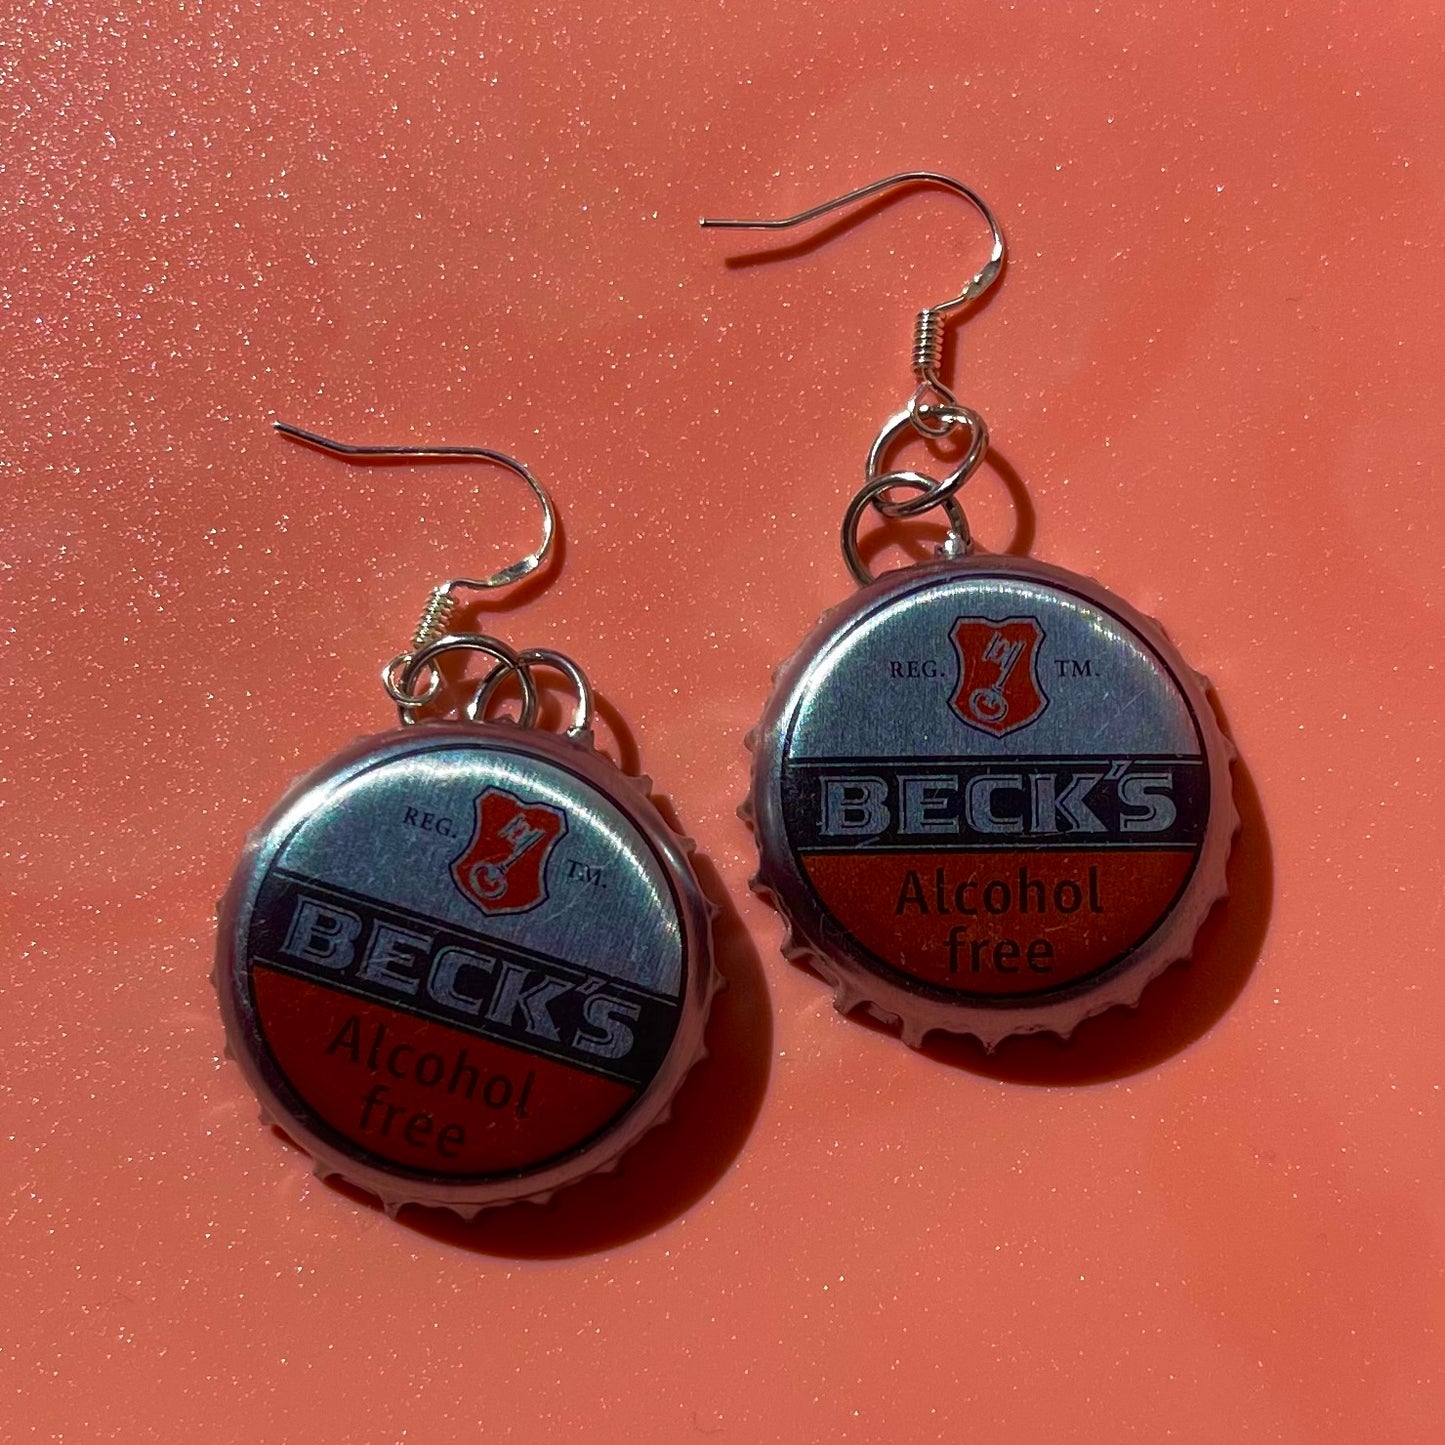 Beck’s Alcohol Free Bottle Cap Earrings